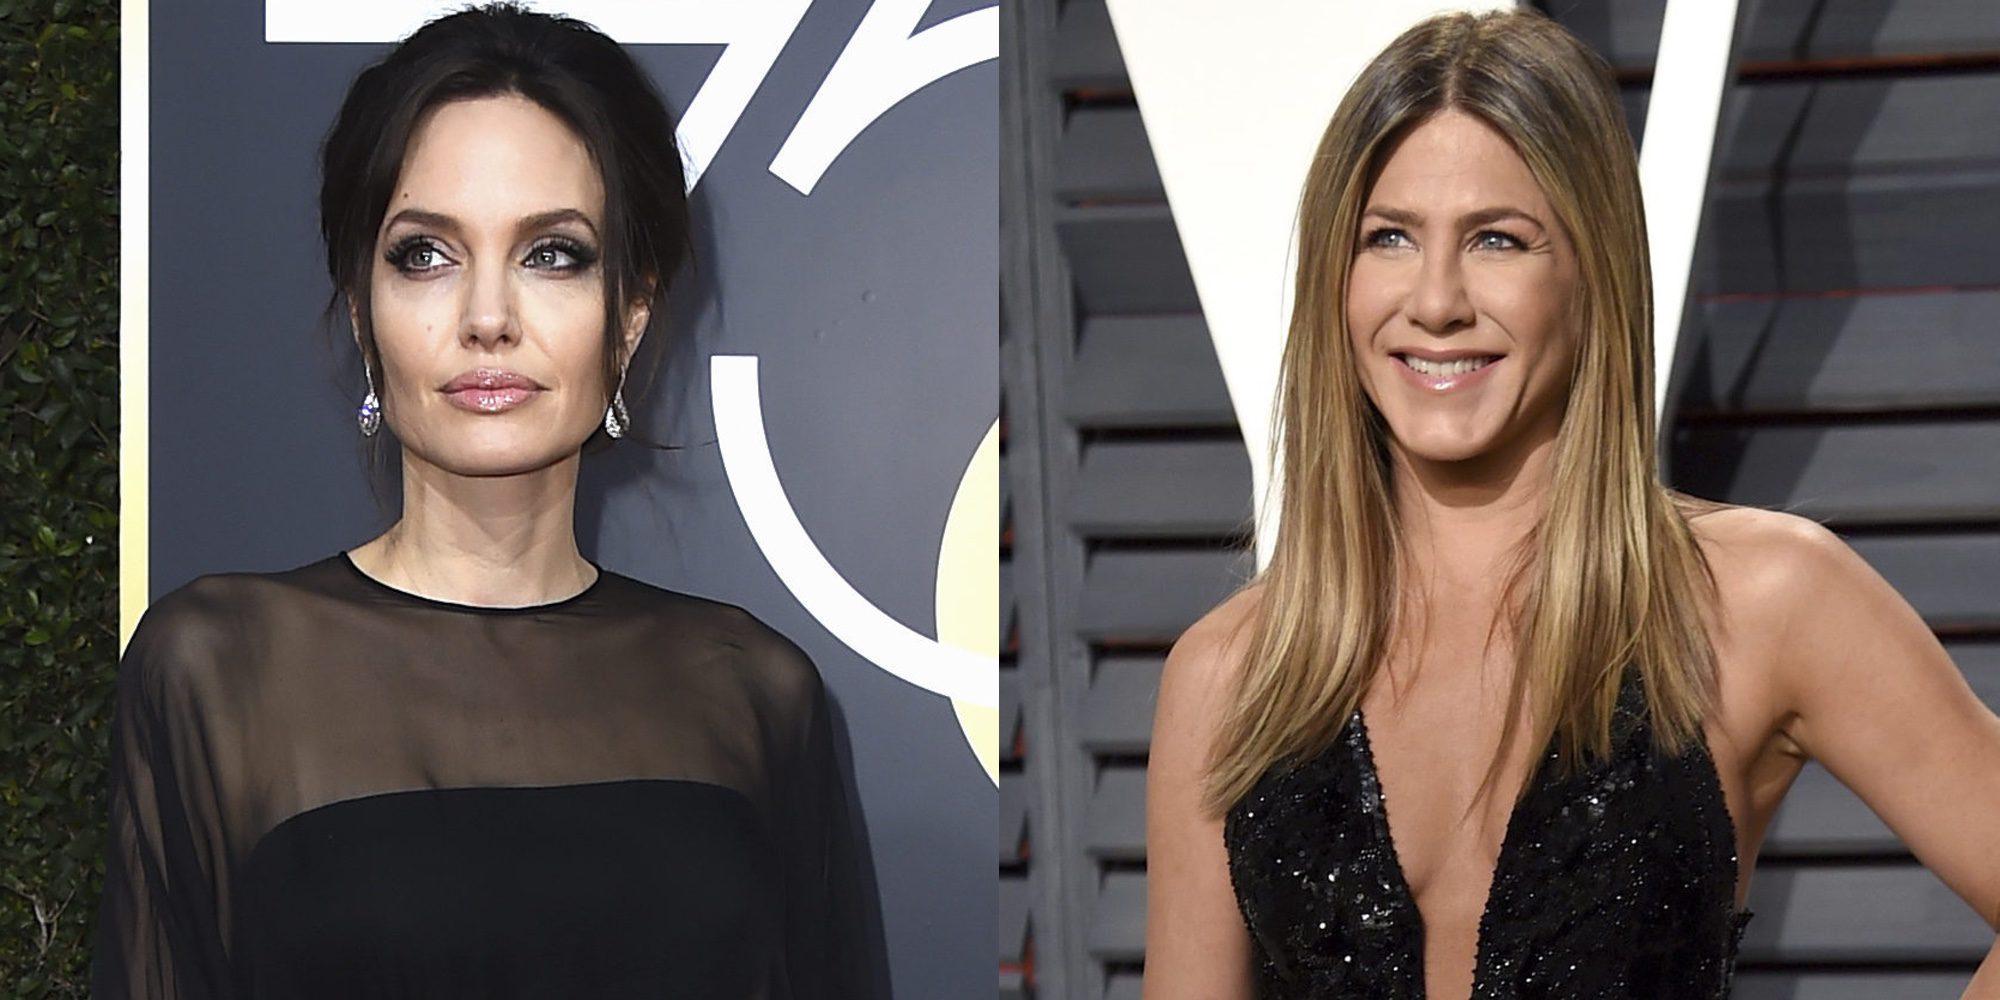 El gesto de Angelina Jolie hacia Jennifer Aniston que no pasó desapercibido a Dakota Johnson